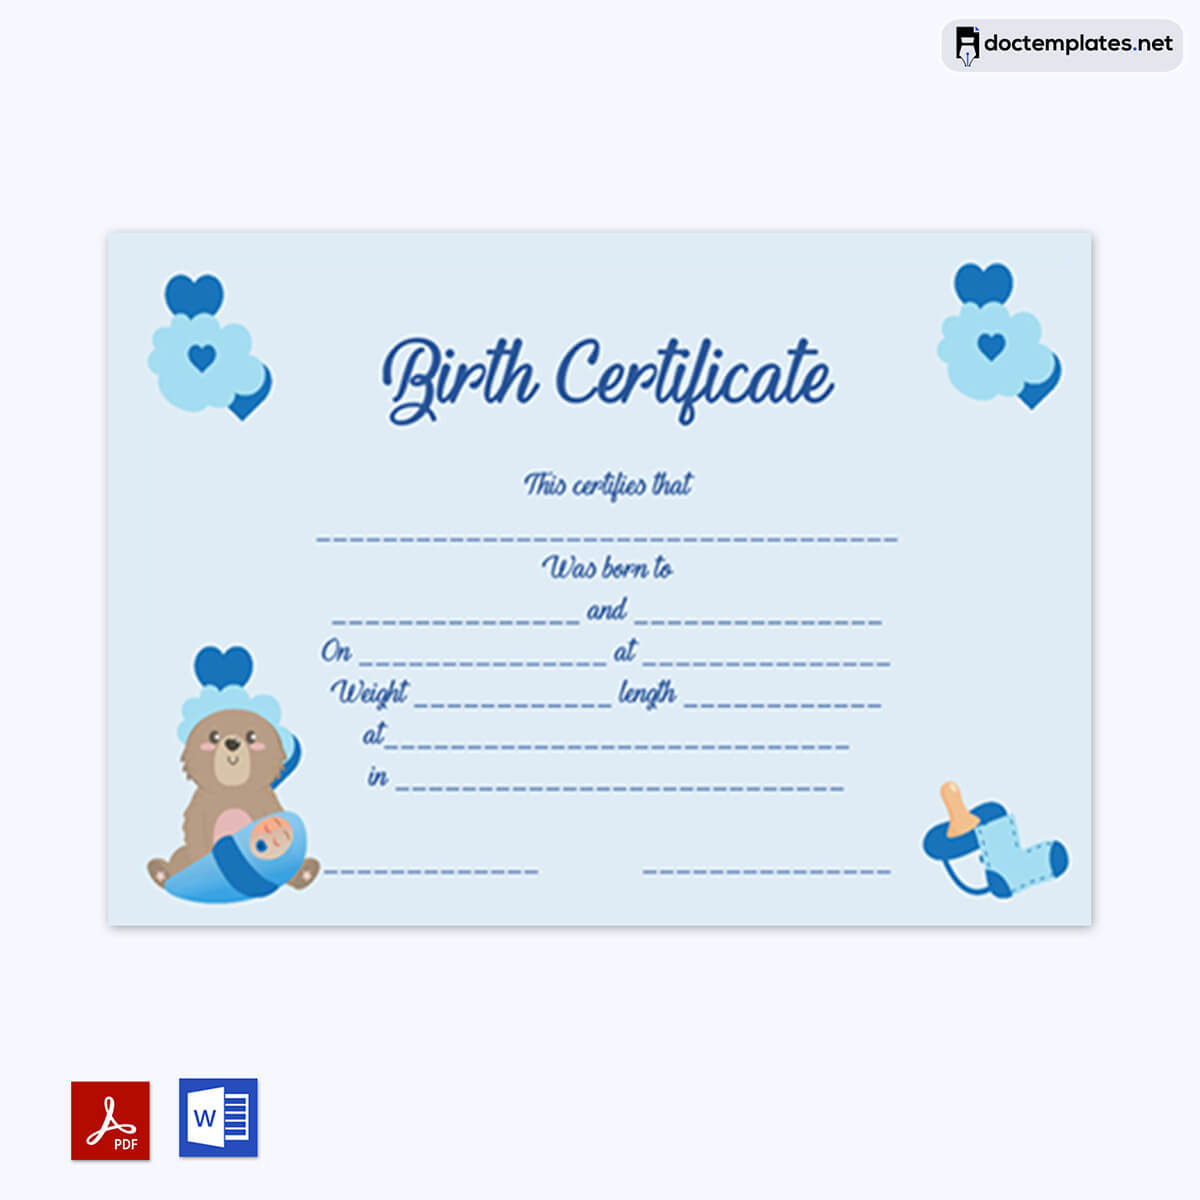 Image of Blank birth certificate PDF
Blank birth certificate PDF
06